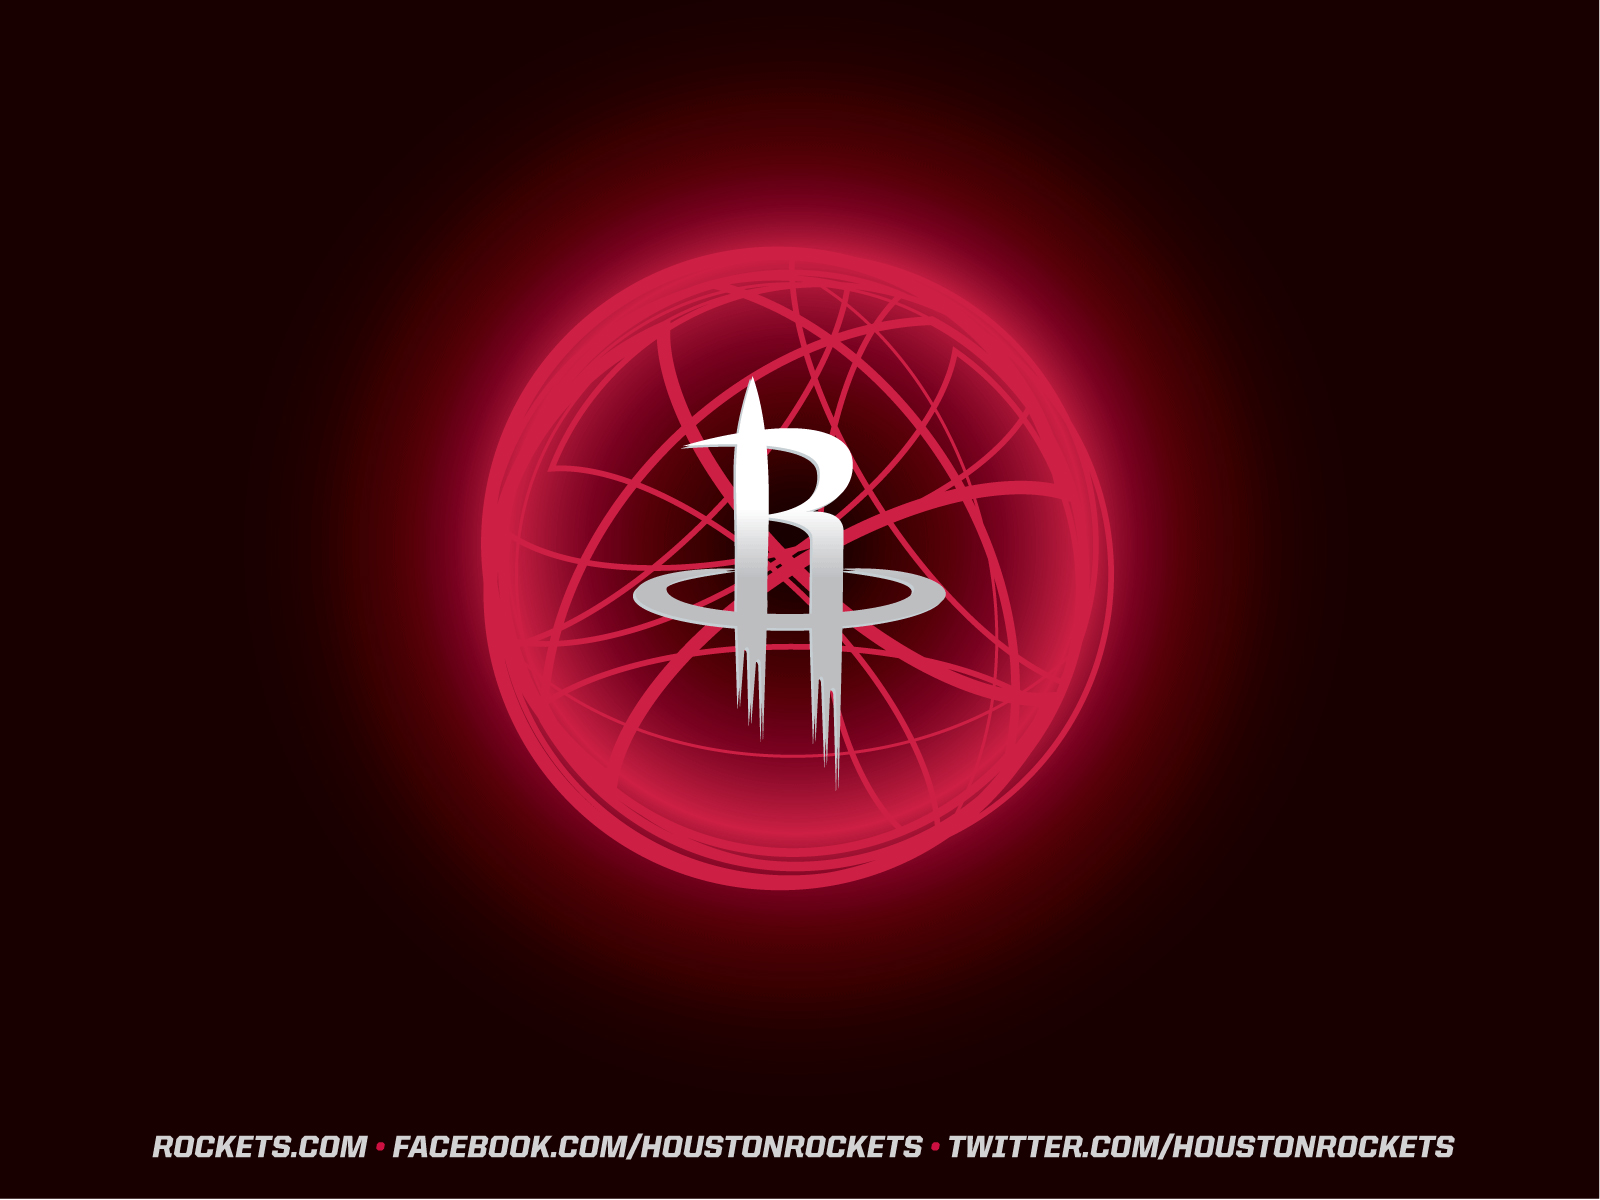 Houston Rockets Tickets Nba Basketball